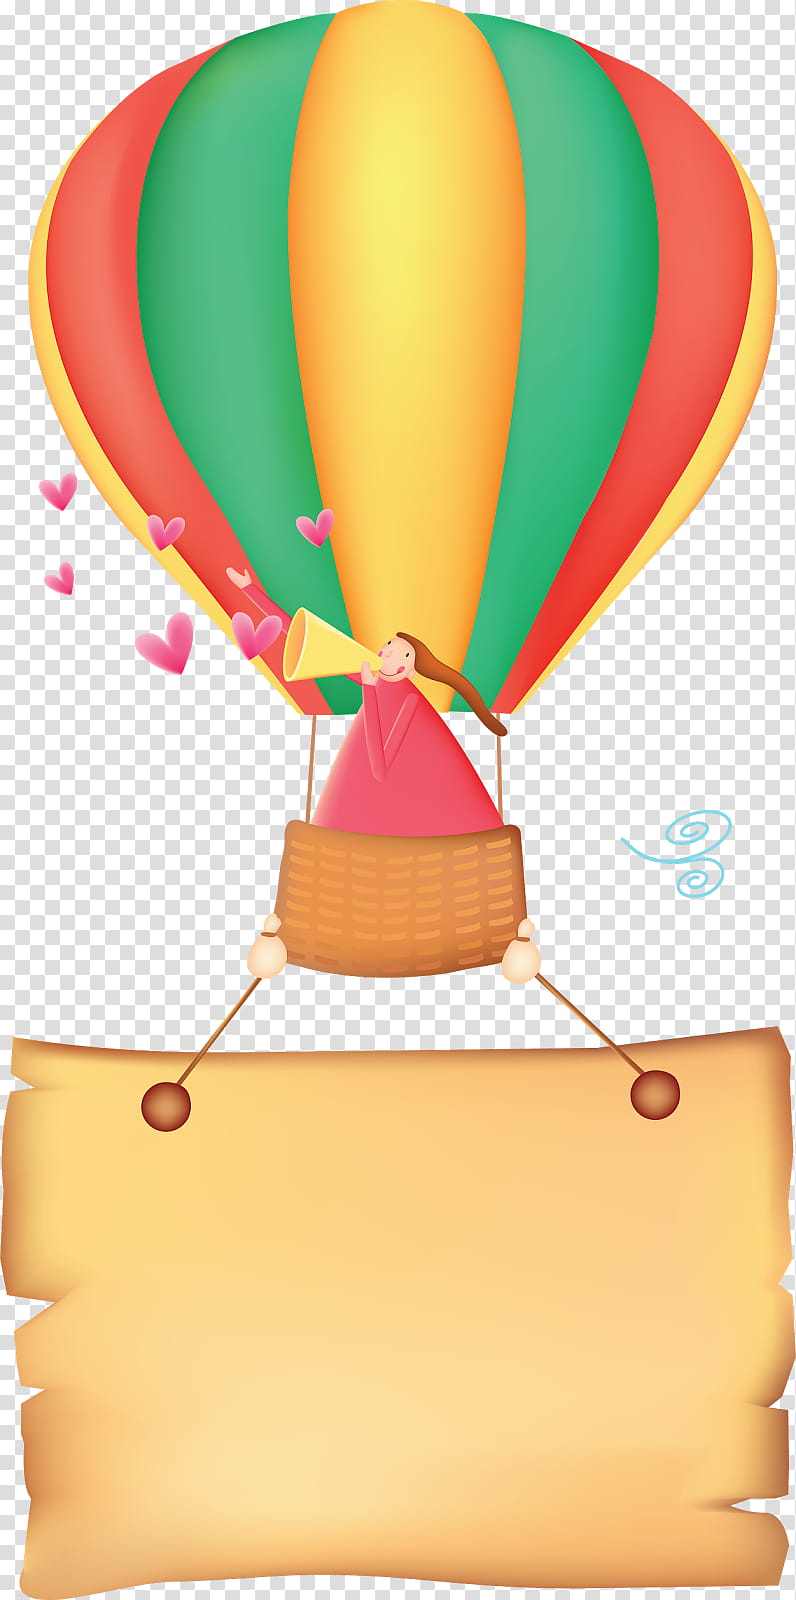 Birthday Balloon, Hot Air Balloon, Aerostat, Flight, Vintage Hot Air Balloon, Toy, Airship, Birthday transparent background PNG clipart